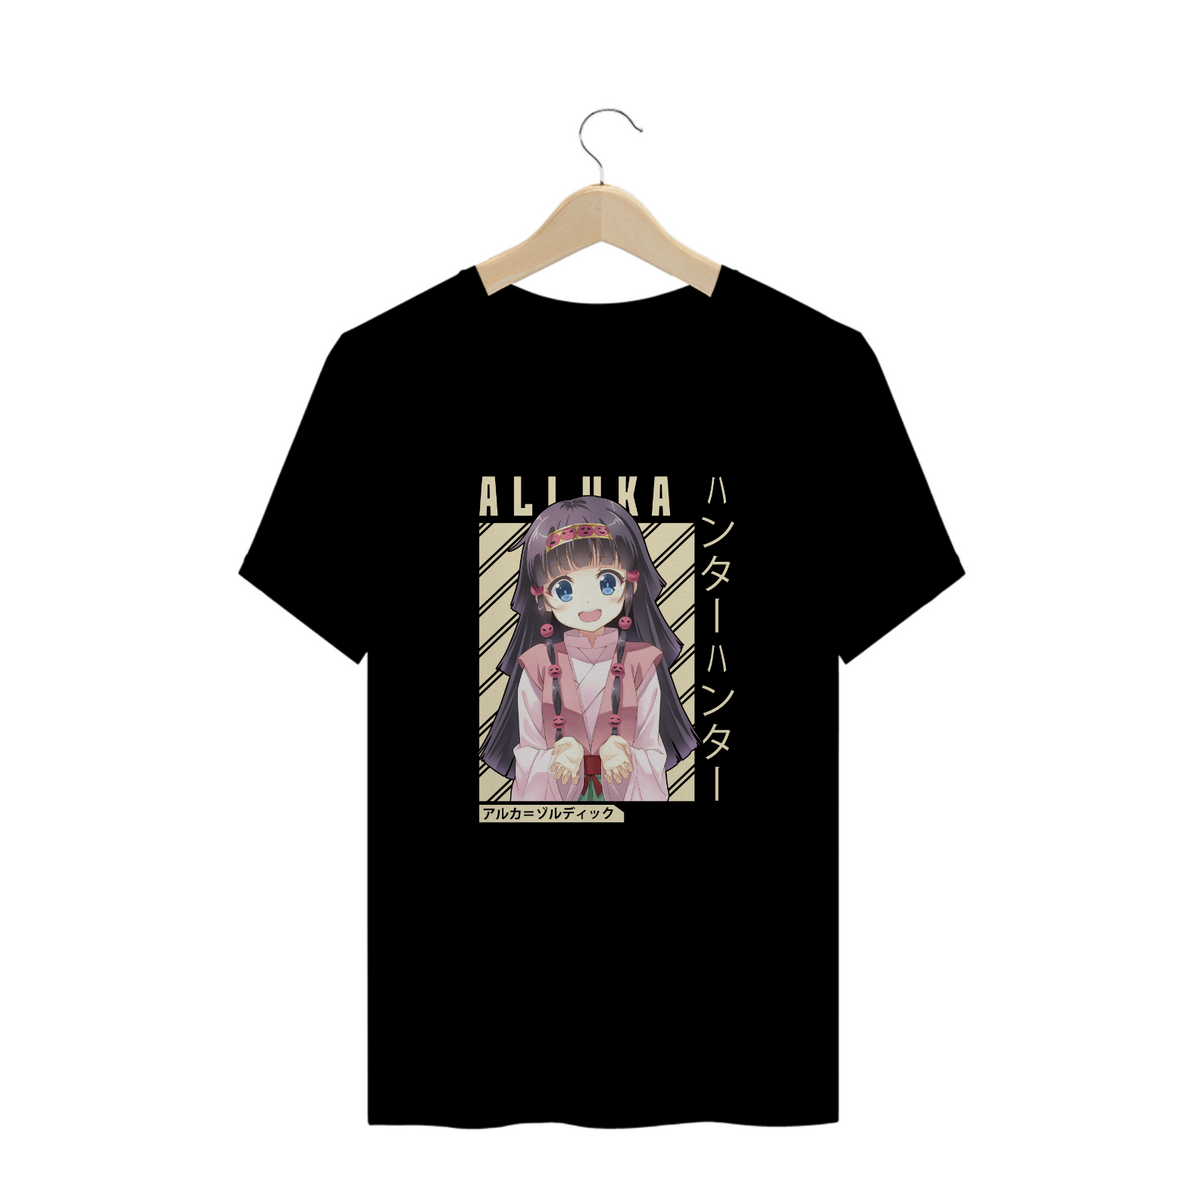 Nome do produto: Camisa Alluka